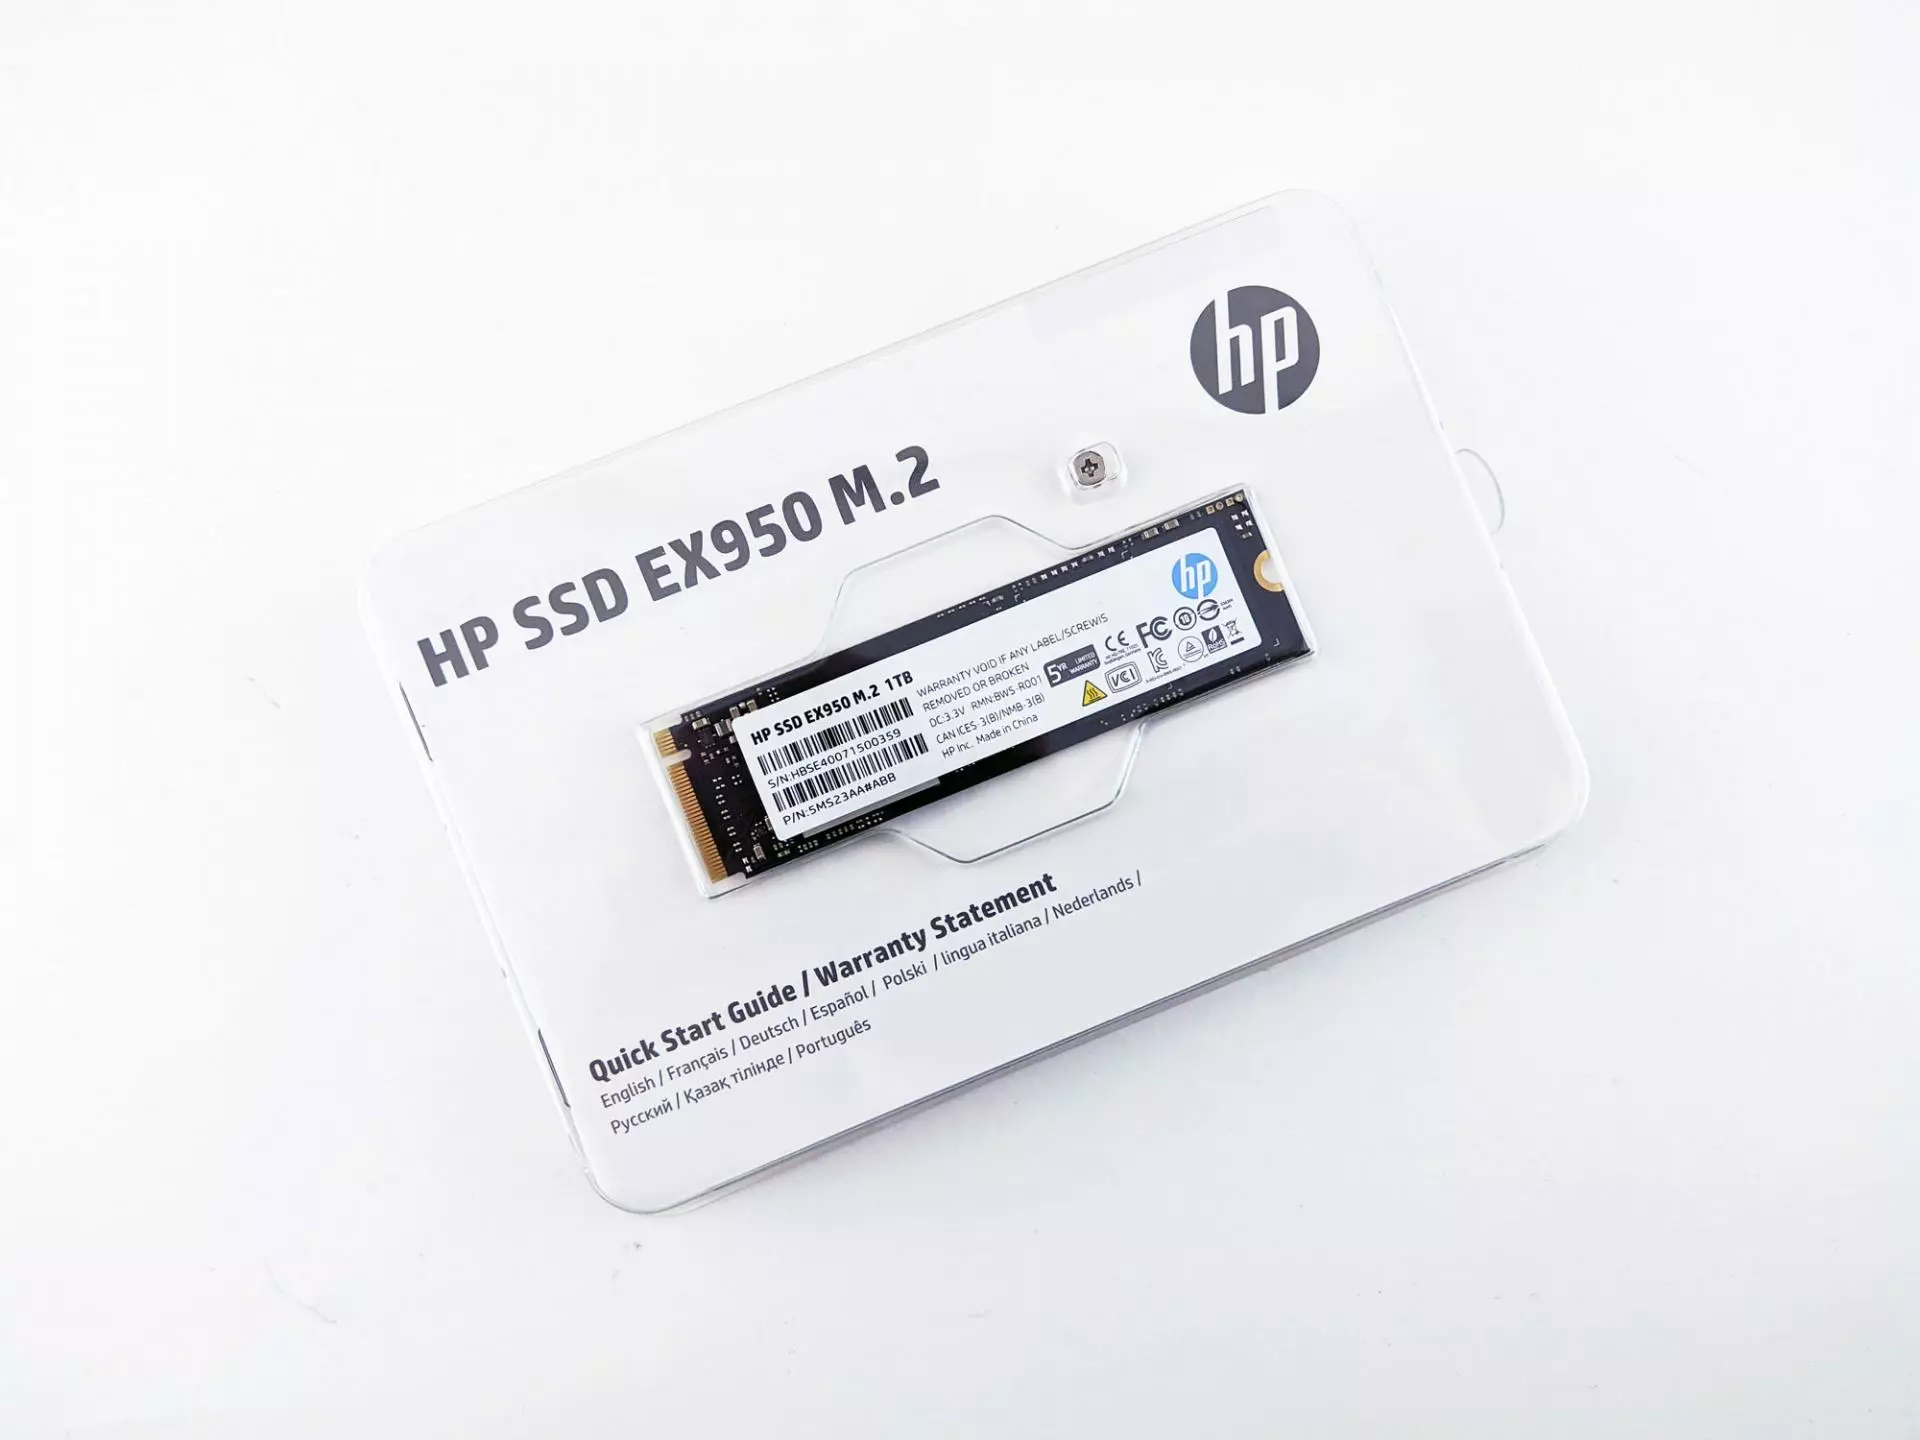 Uvavanyo lwe-SSD HP950